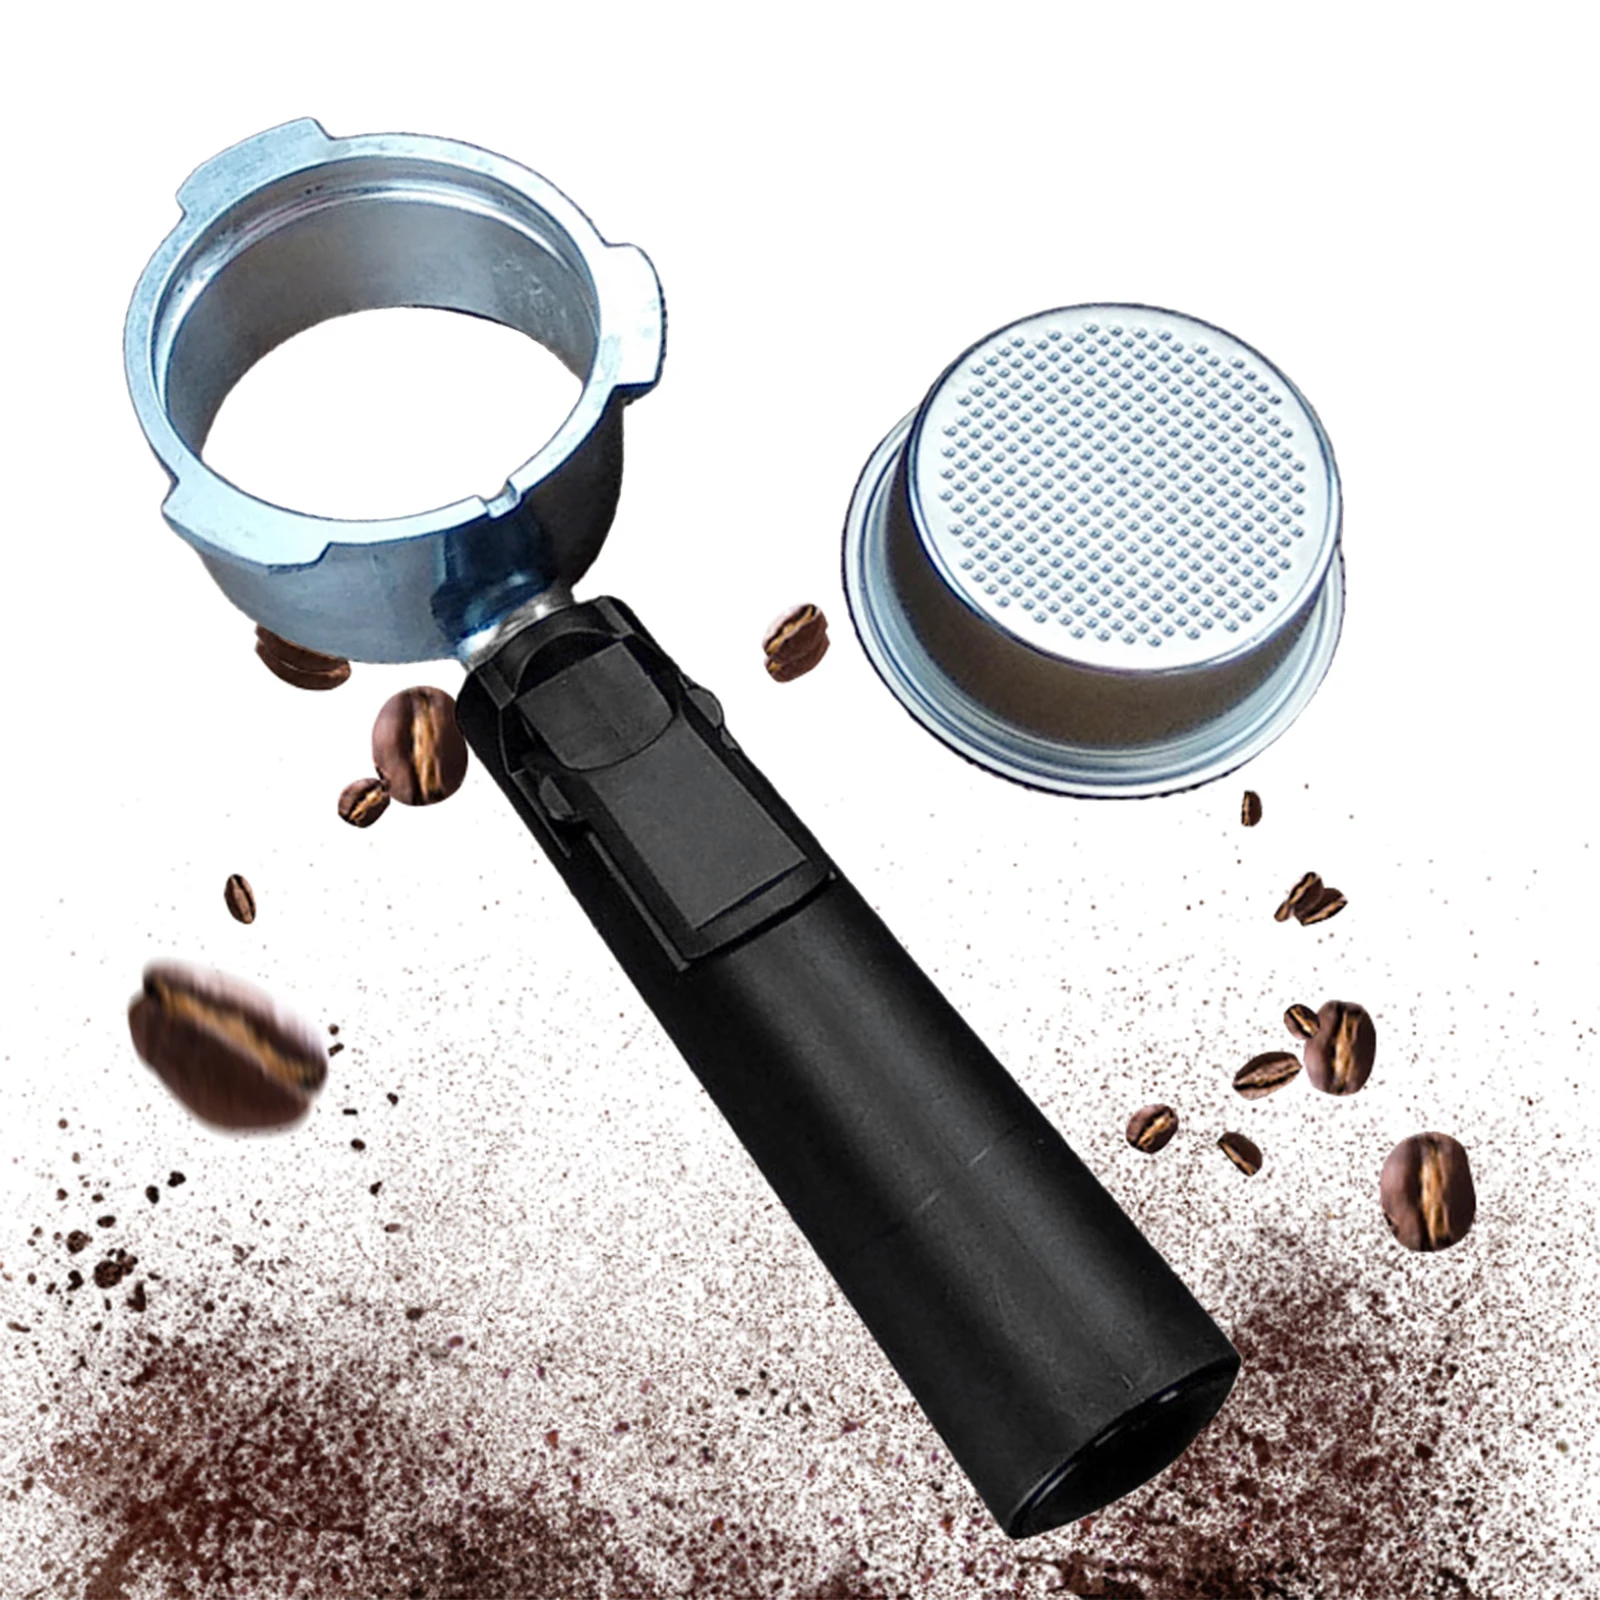 Durable Stainless Steel 51mm Naked Portafilter Filter Holder for Coffee Maker Detachable Design Easy Clean Kitchen